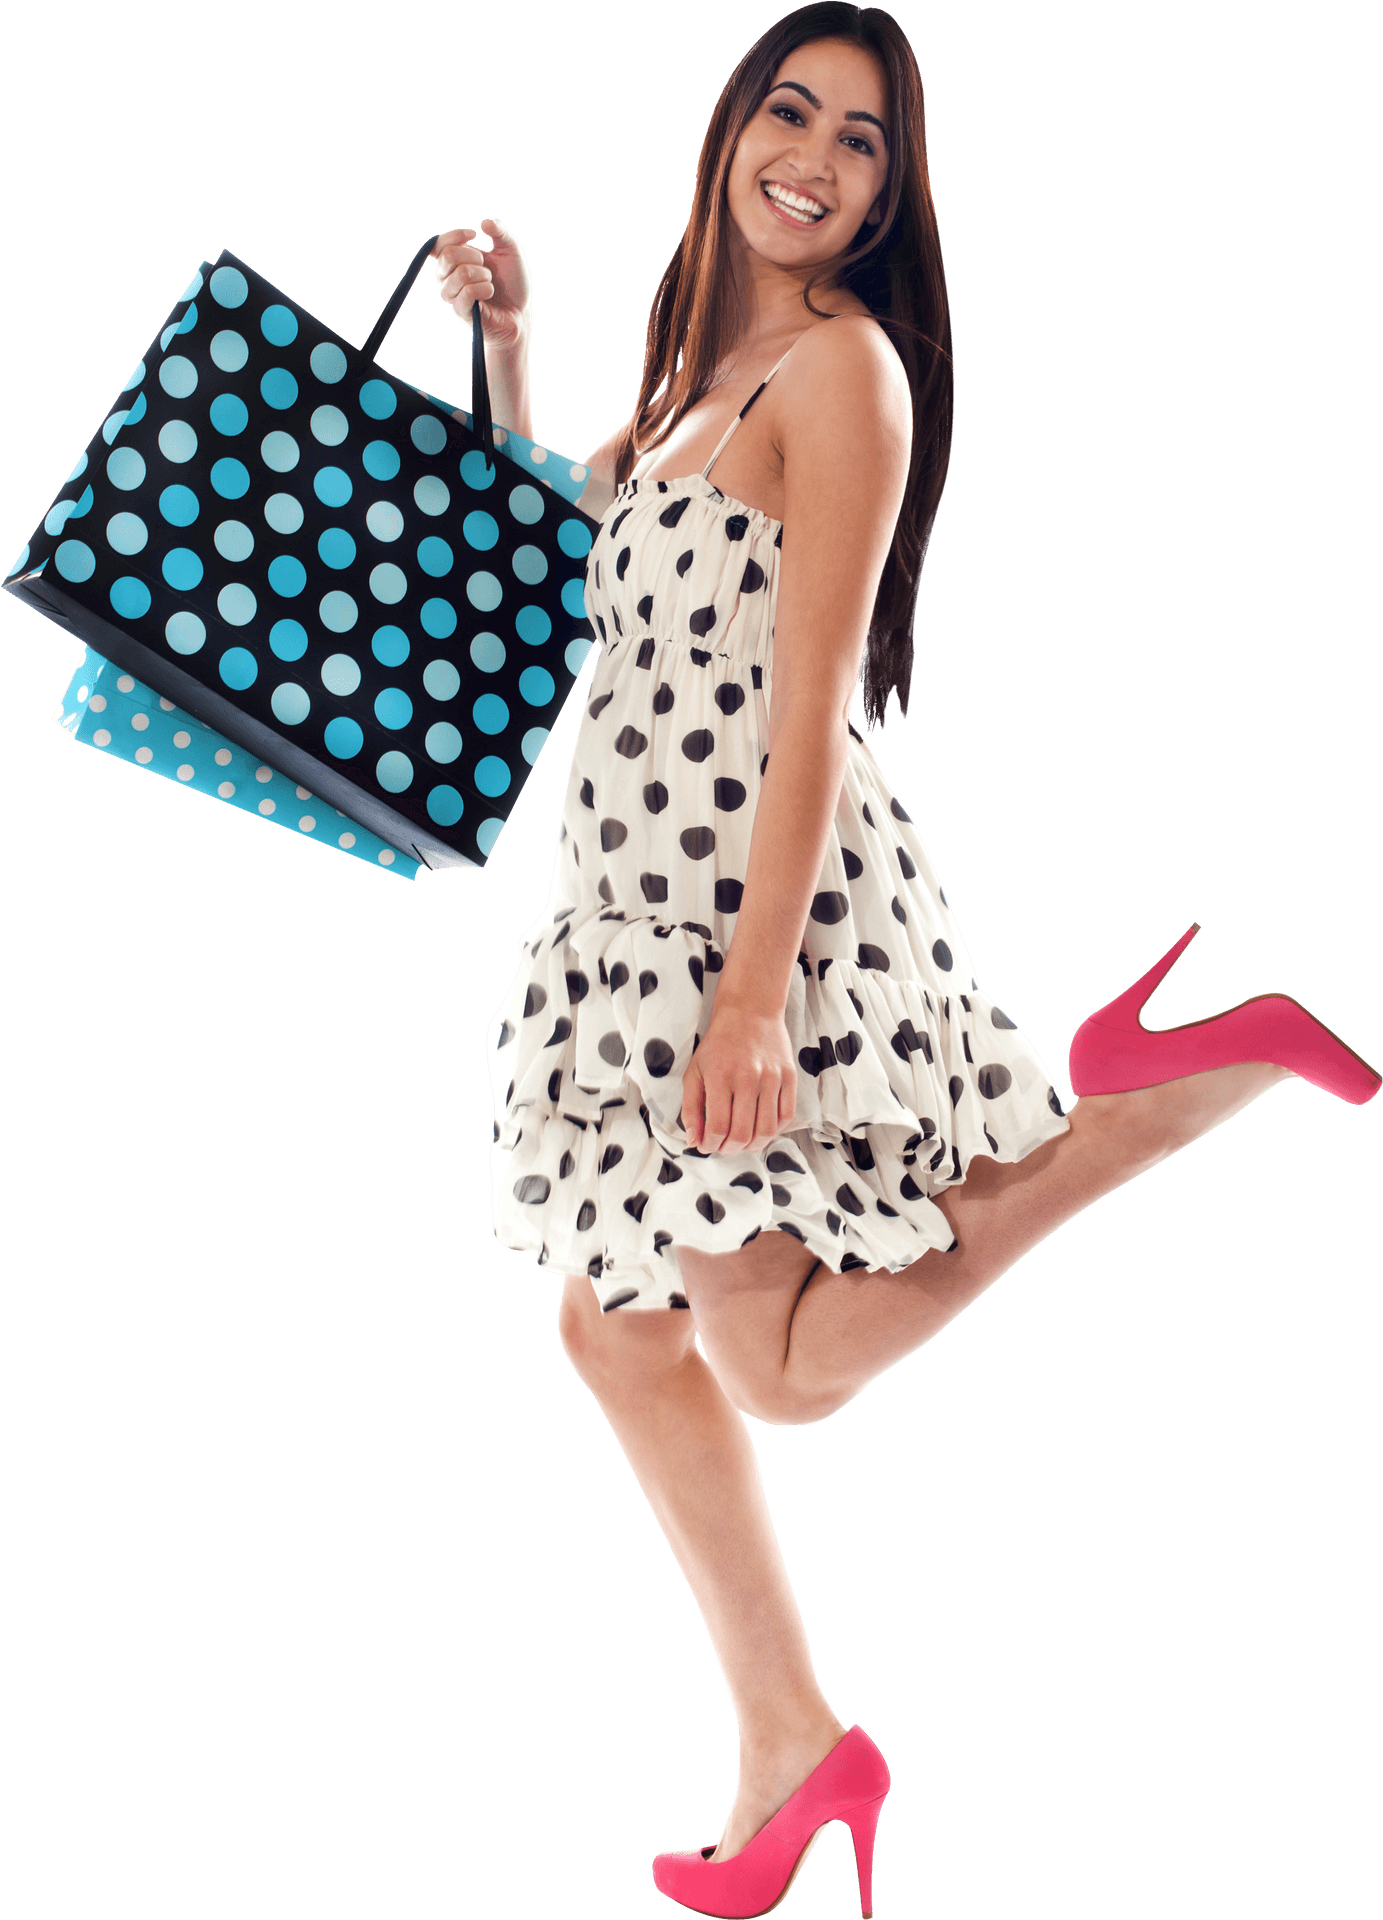 Polka Dot Dress Model With Colorful Bag PNG